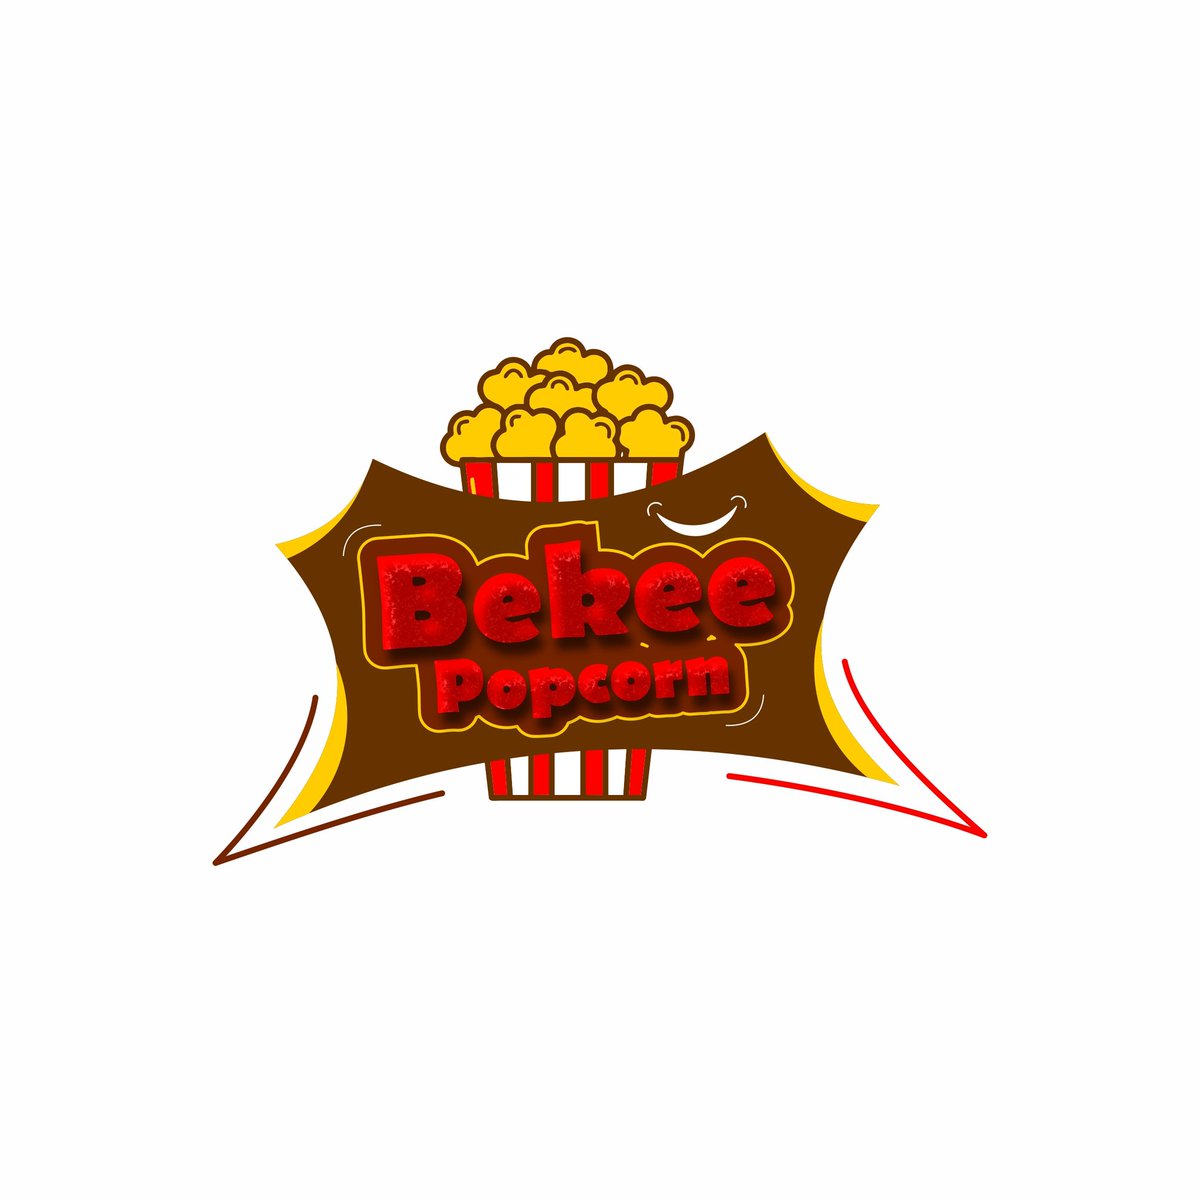 Logo for Bekee popcorn done 😊
#MegogiCreative
#WeGotYou